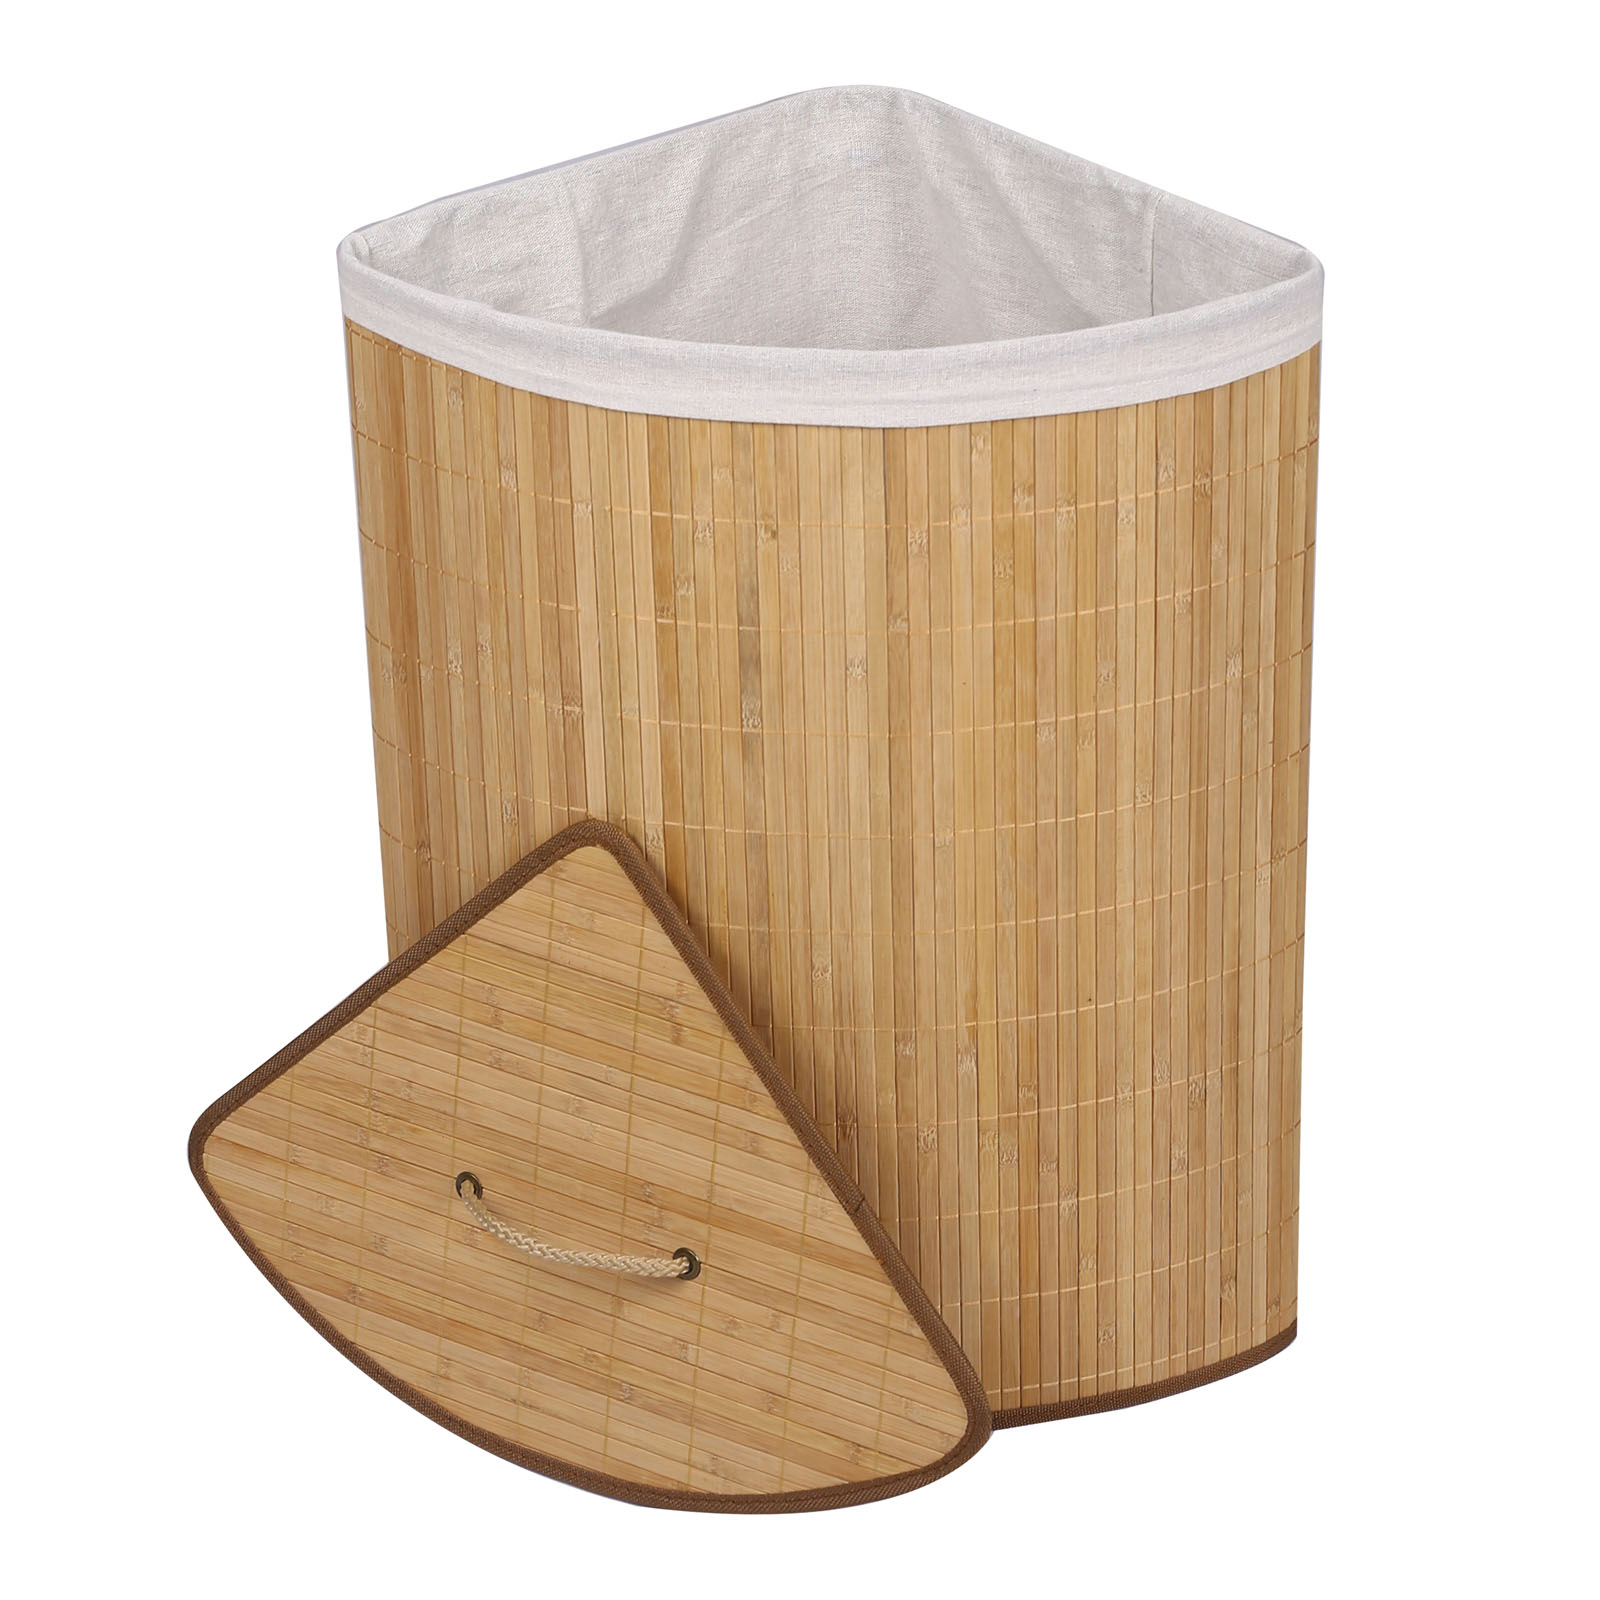 Cesto para colada cuadrado Bambú Lino de algodón Montaje sencillo